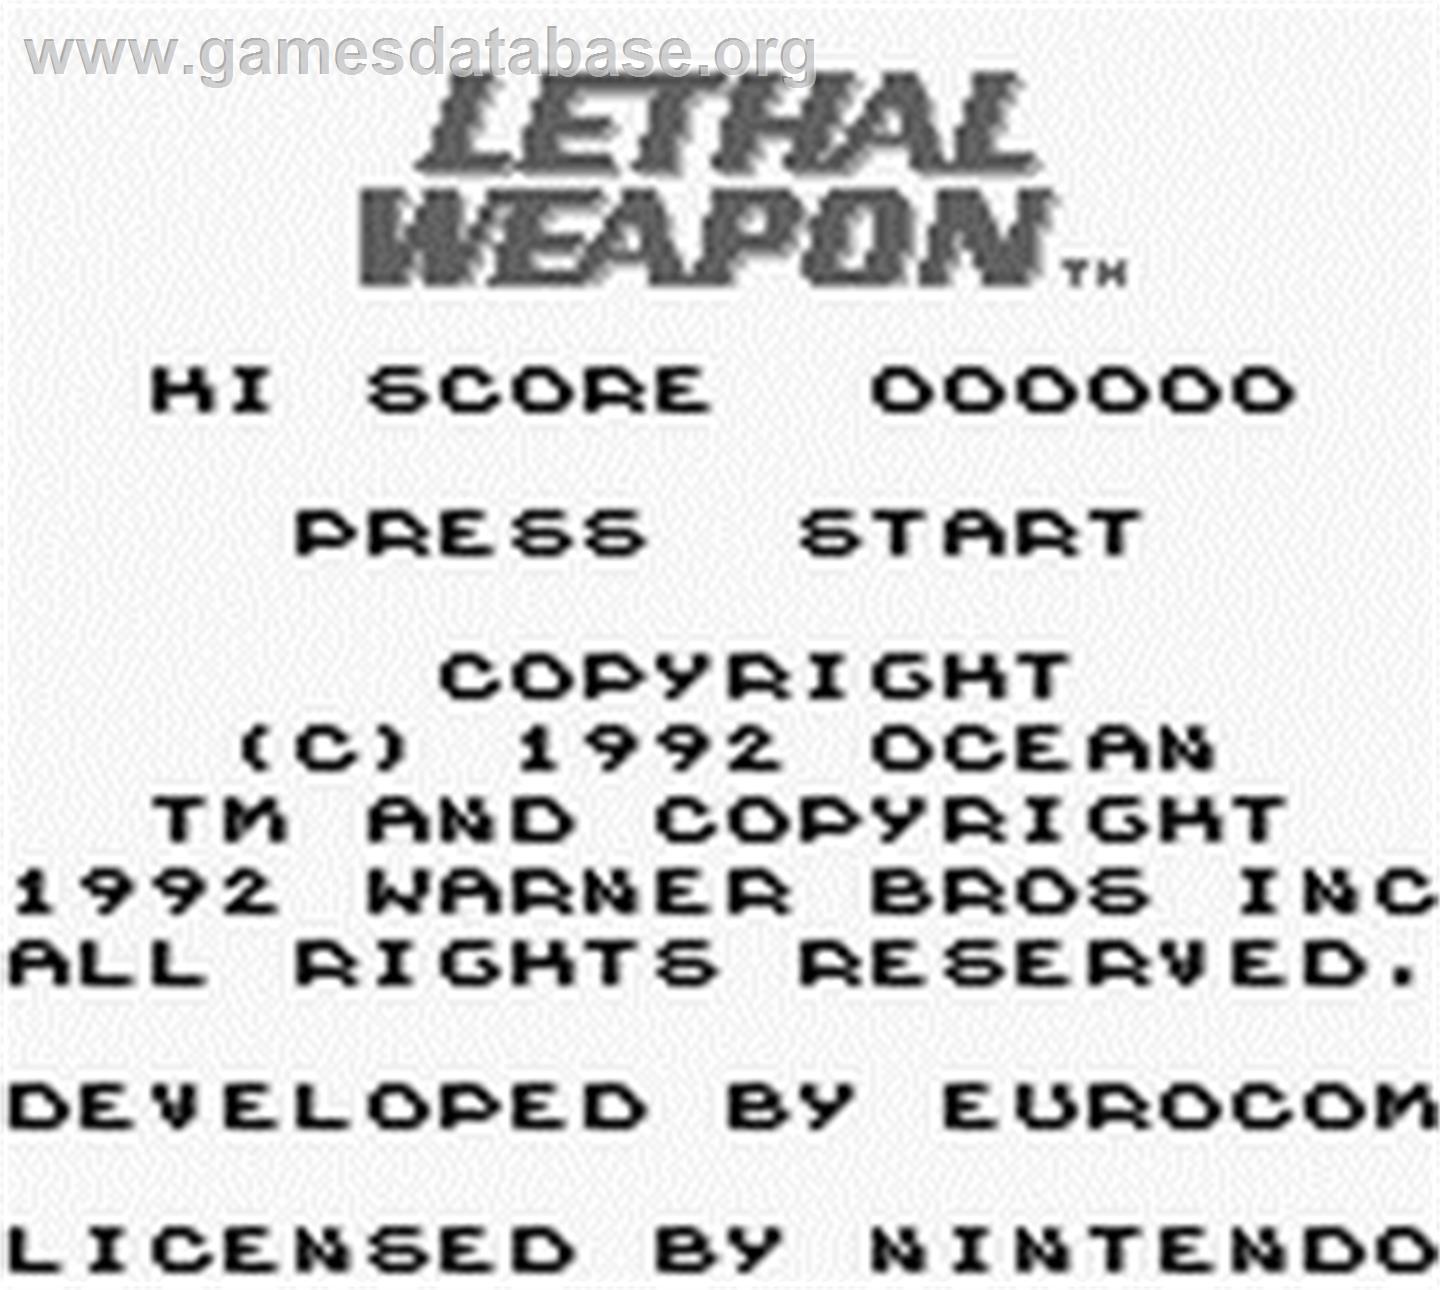 Lethal Weapon - Nintendo Game Boy - Artwork - Title Screen